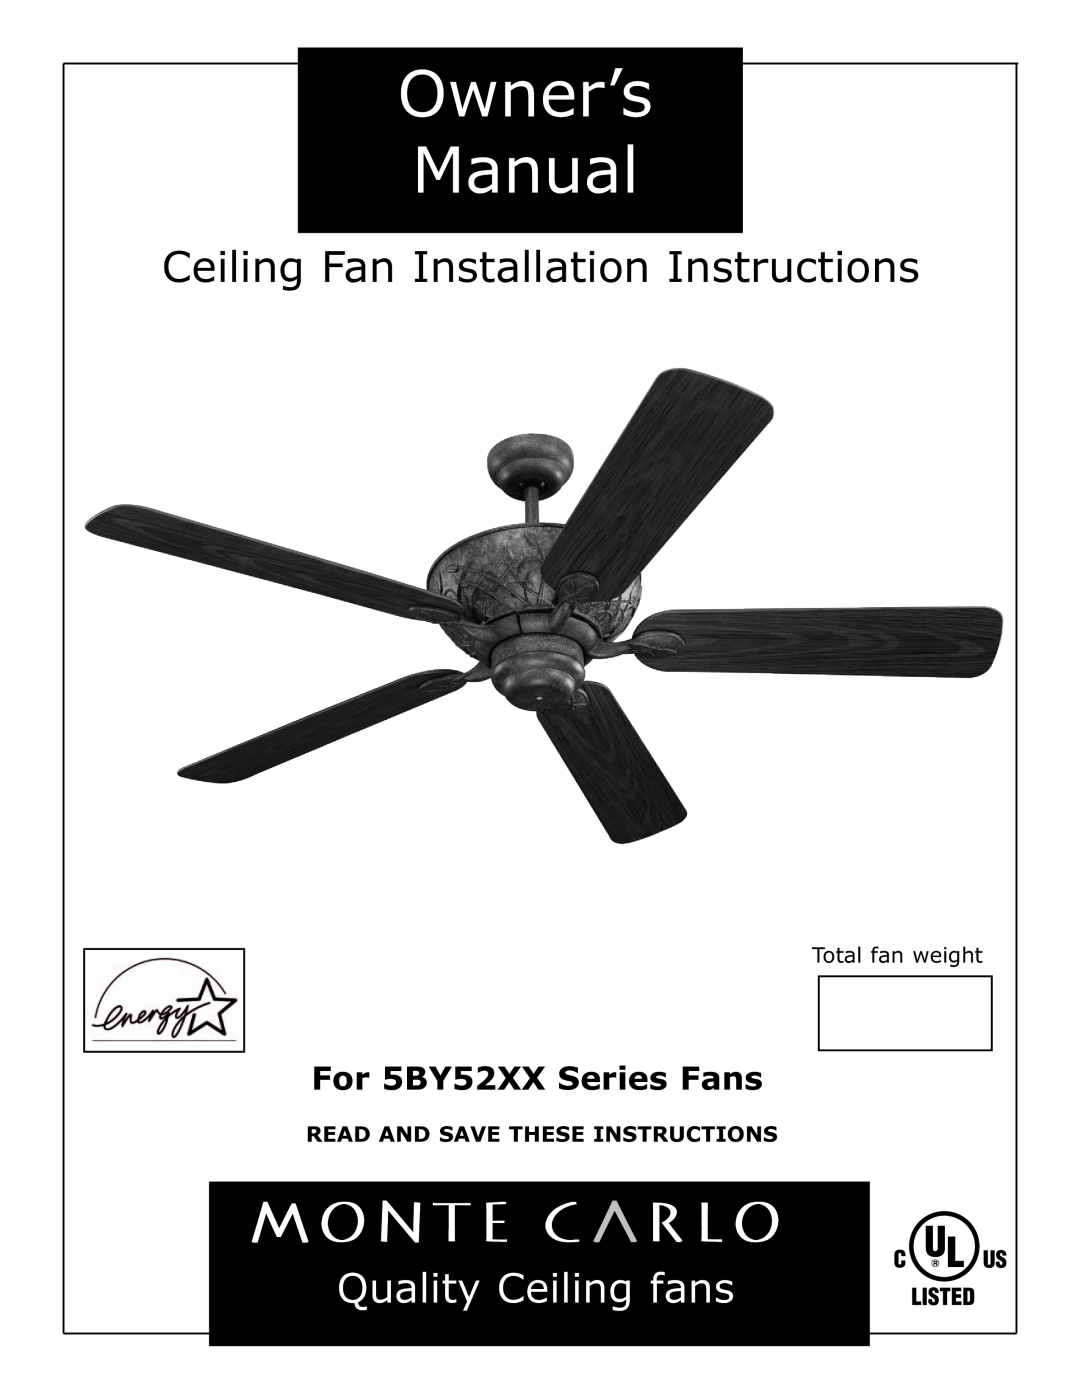 Monte Carlo Fan Company 5BY52XX owner manual Ceiling Fan Installation Instructions, Quality Ceiling fans, Total fan weight 